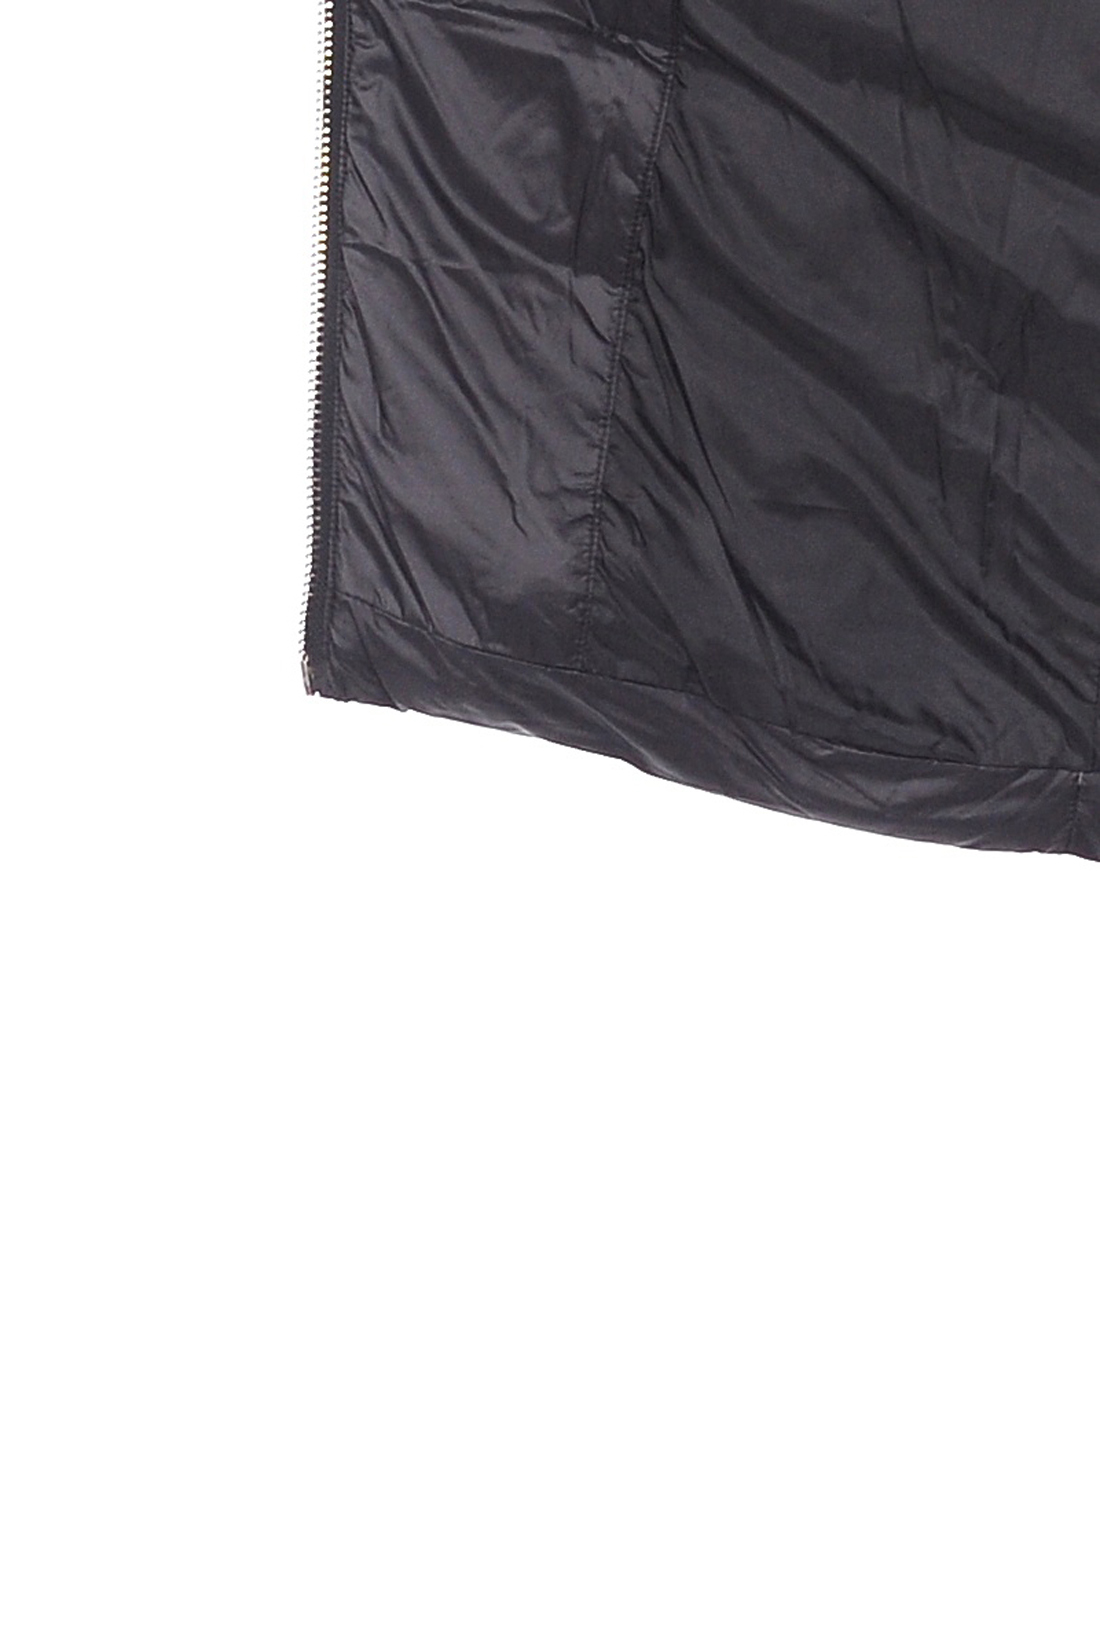 Пуховик-косуха с воротником из овчины (арт. baon B008507), размер M, цвет черный Пуховик-косуха с воротником из овчины (арт. baon B008507) - фото 2